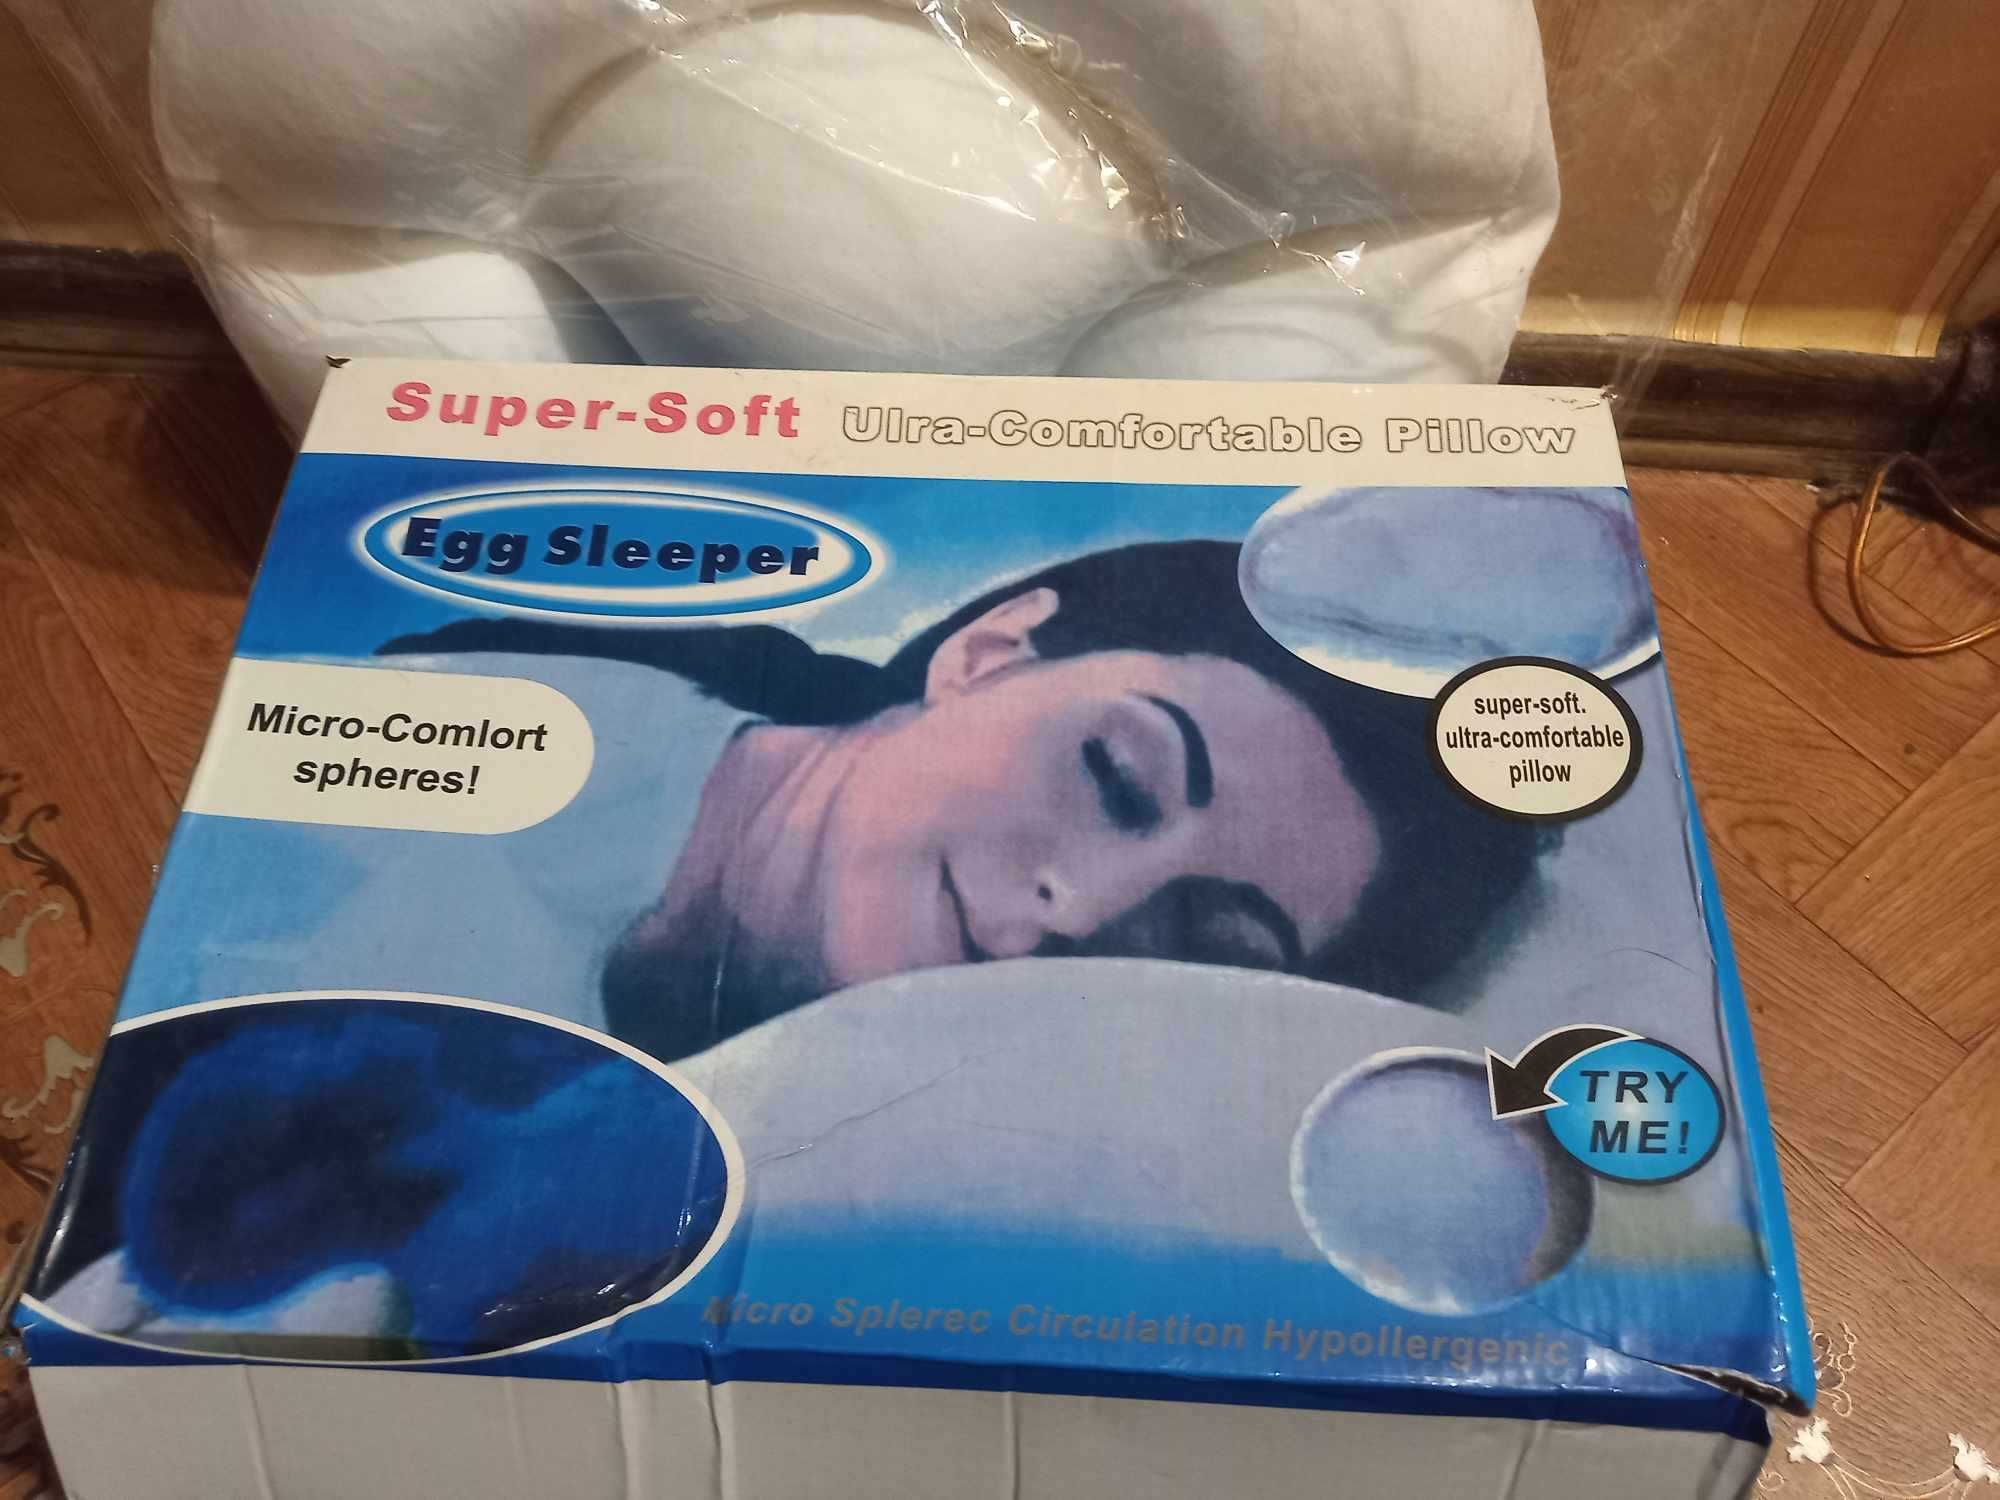 Анатомическая  для сна супер мягкая подушка Фирма - egg sleeper